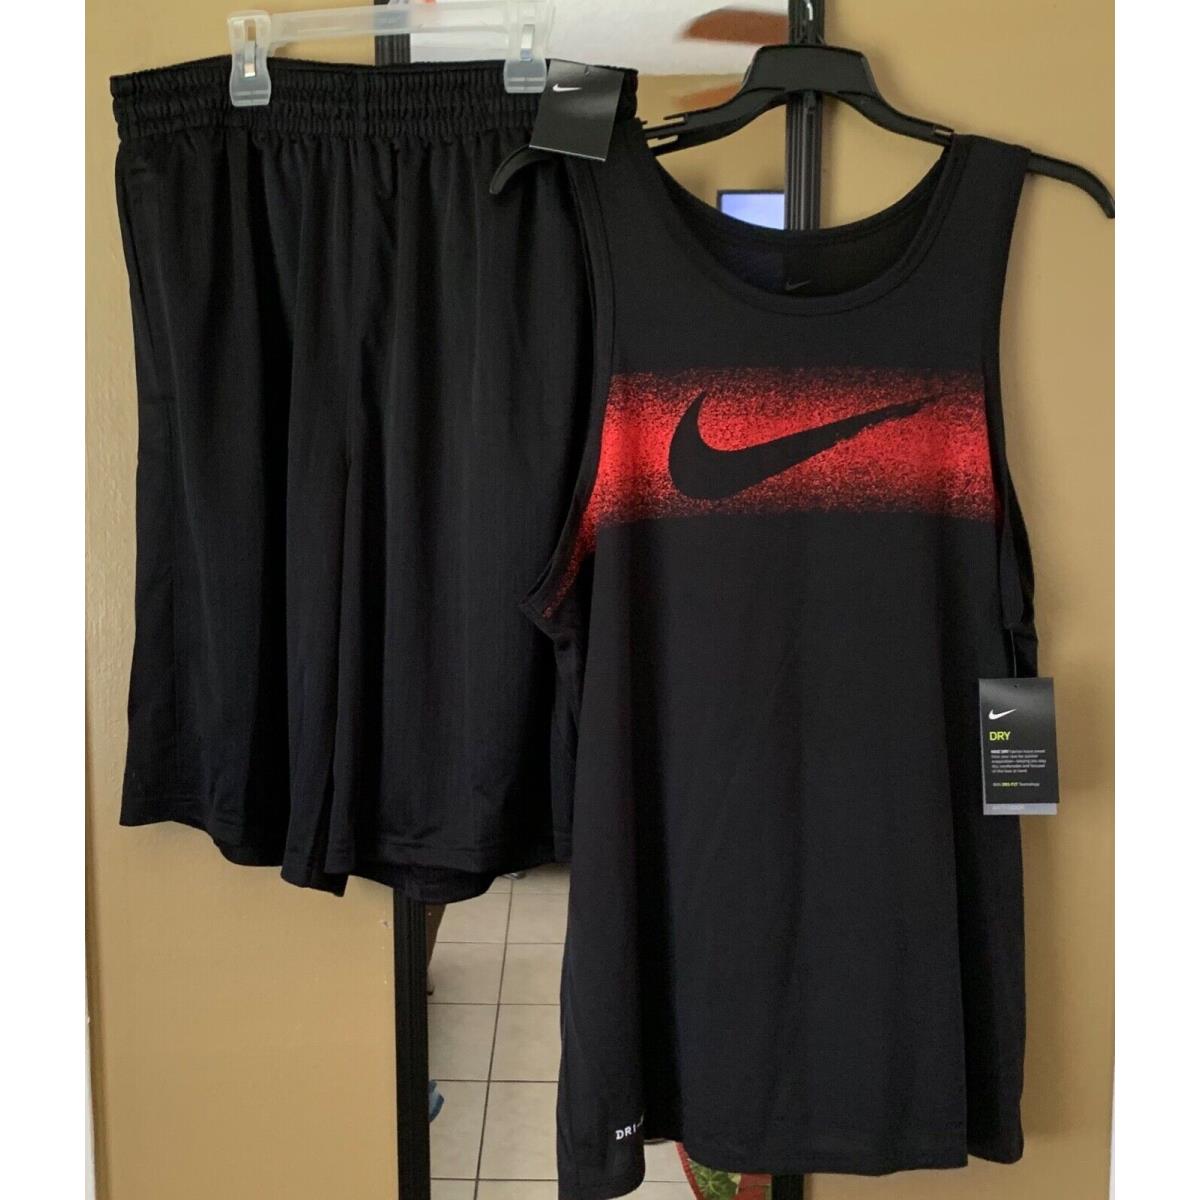 Mens Nike Dry-fit Shorts Tank Top Black SZ XL AT3405-010 Outfit